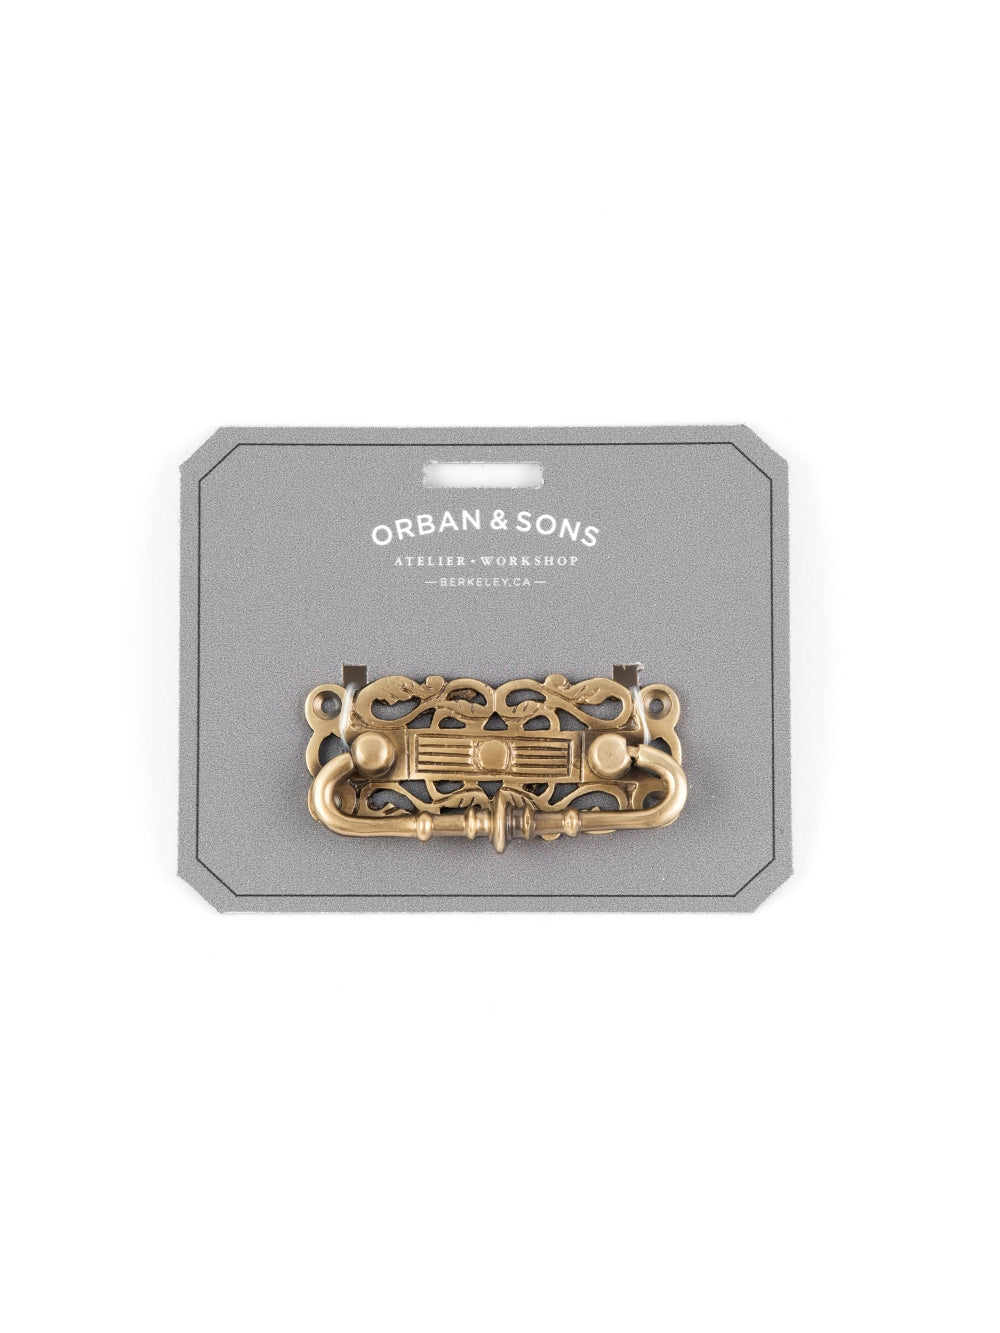 Orban & Sons Brass Cabinet Pulls Brass Puller #5 (1.57" x 3.14") Orban & Sons Brand_Orban & Sons Corkscrews & Tools Orban & Sons Orban_SonsBrassCabinetPulls1